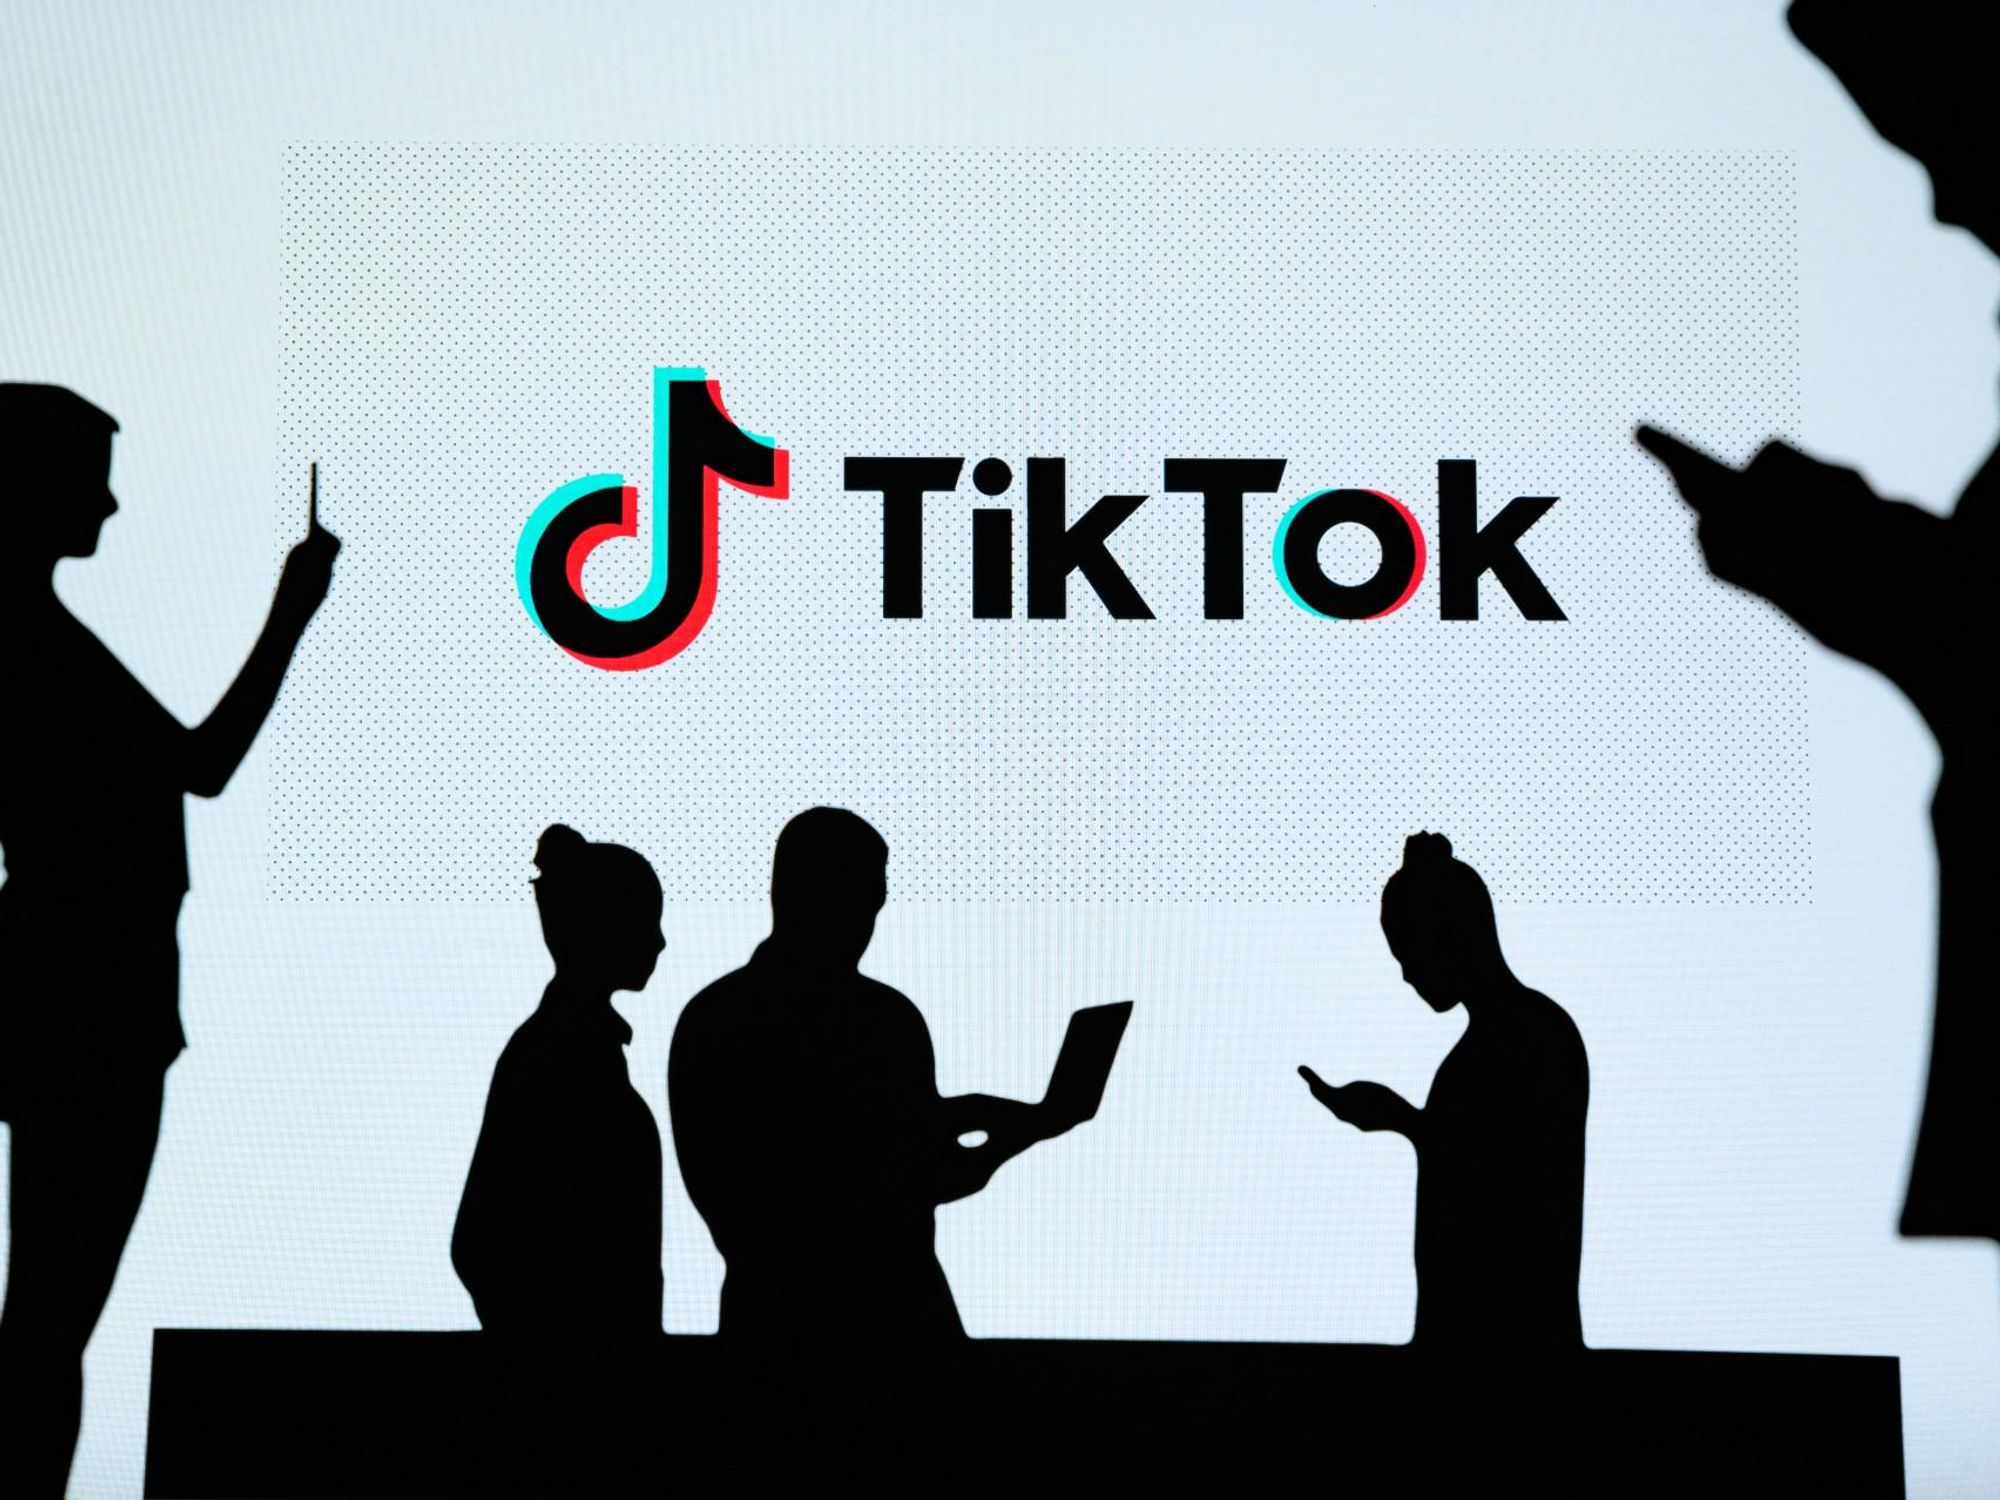 Ex-TikTok Employee Criticizes Company’s ‘996’ Workplace Culture